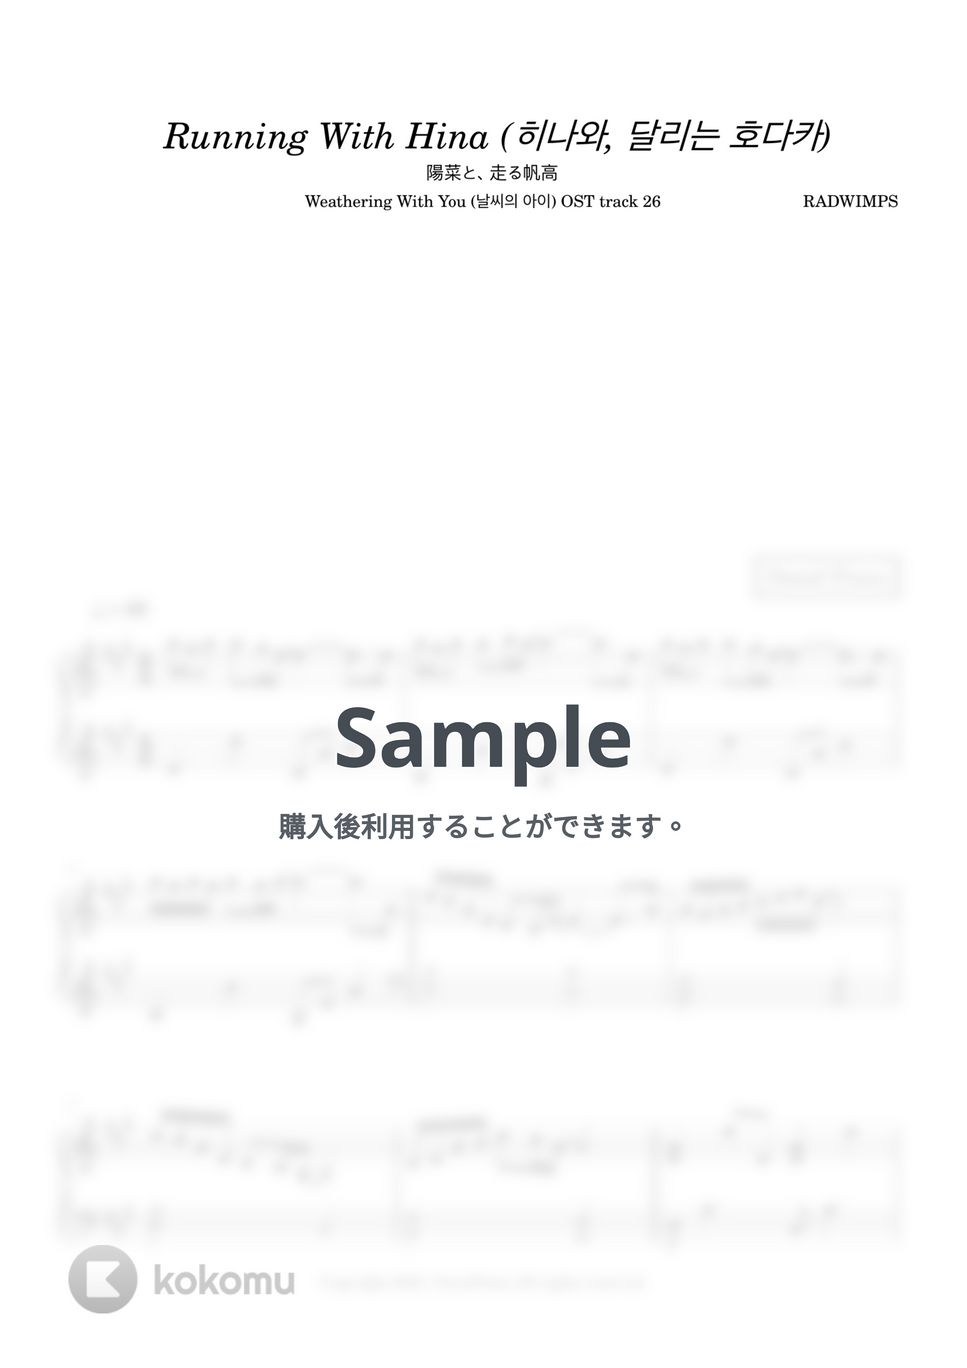 RADWIMPS - 陽菜と、走る帆高 (Running With Hina) (天気の子 OST track 26) by 今日ピアノ(Oneul Piano)